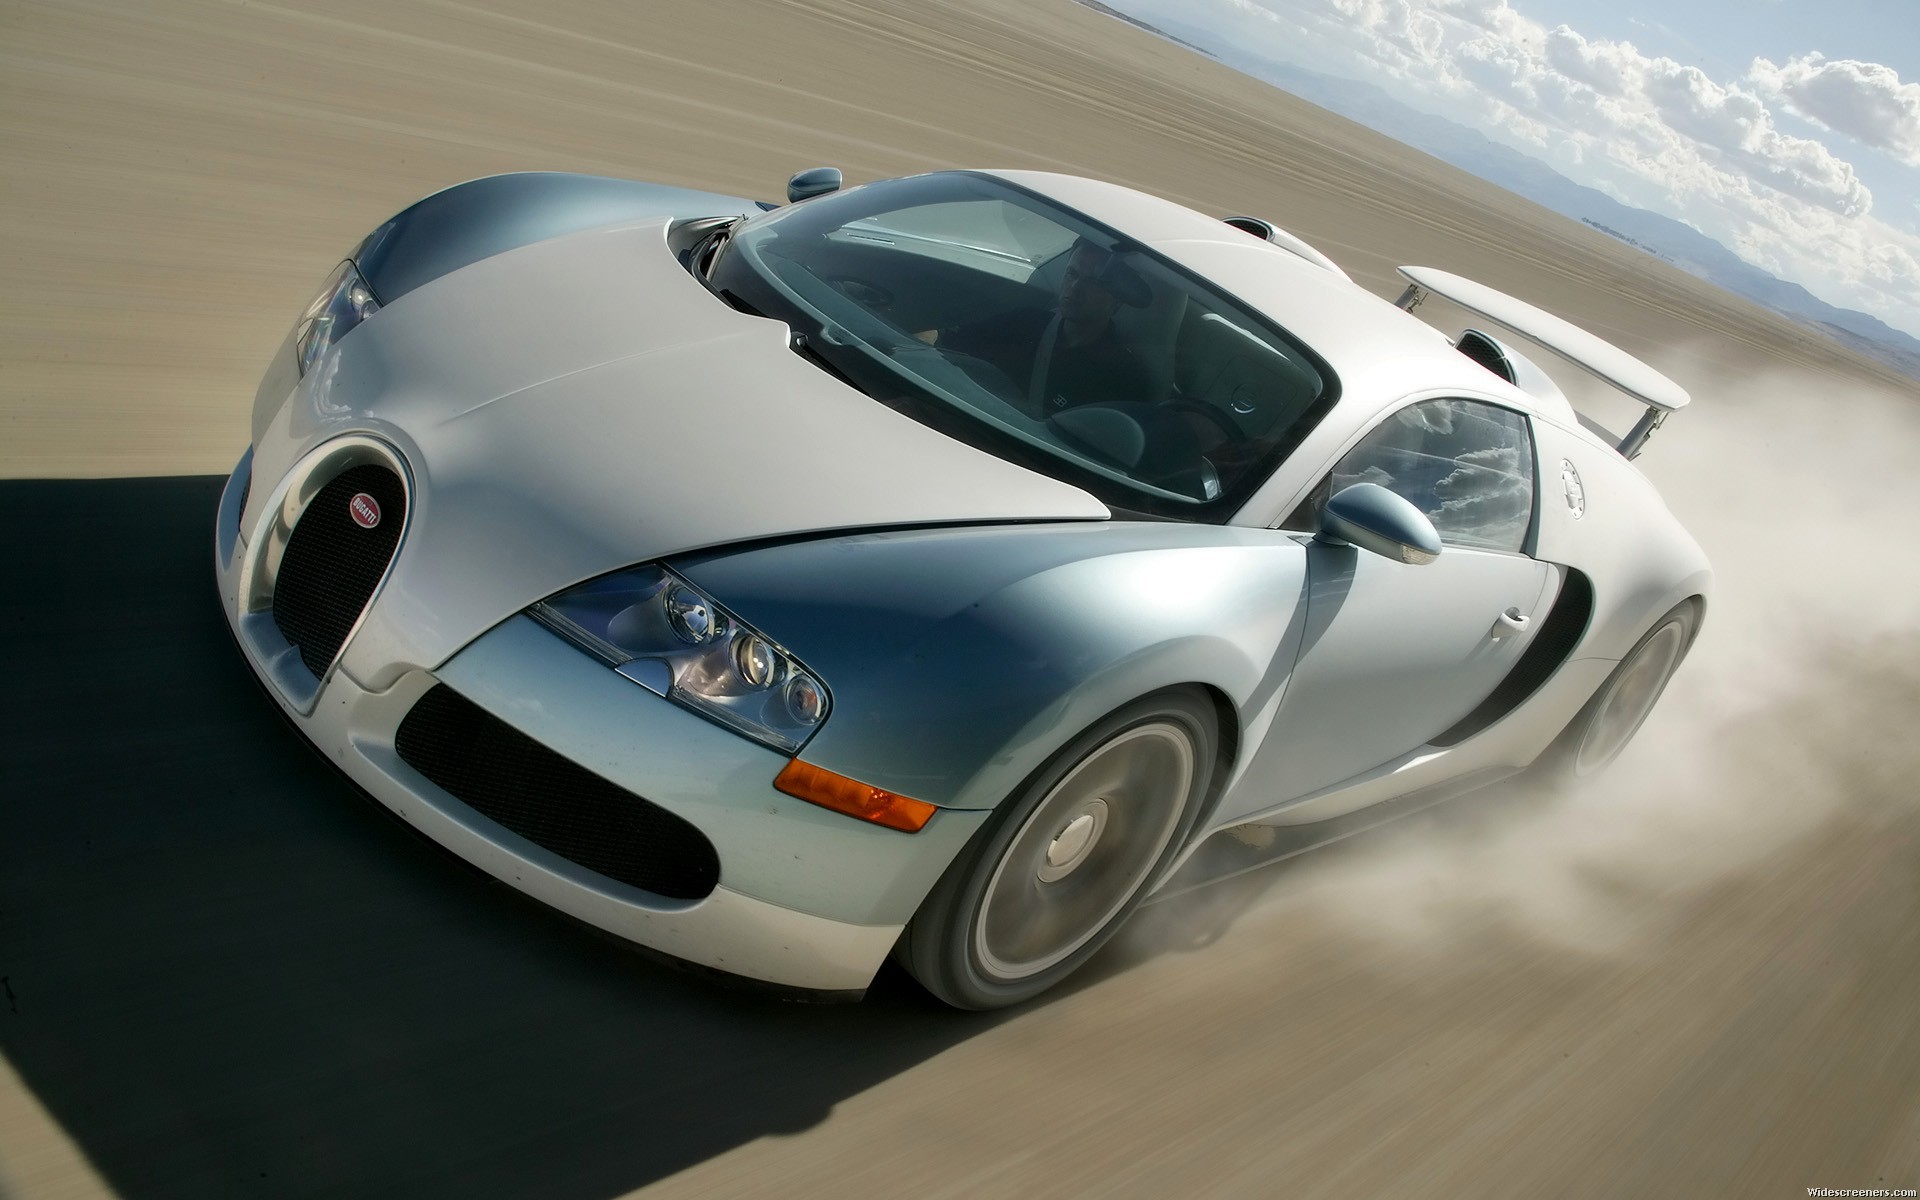 cars, Bugatti Veyron, Bugatti, vehicles - desktop wallpaper